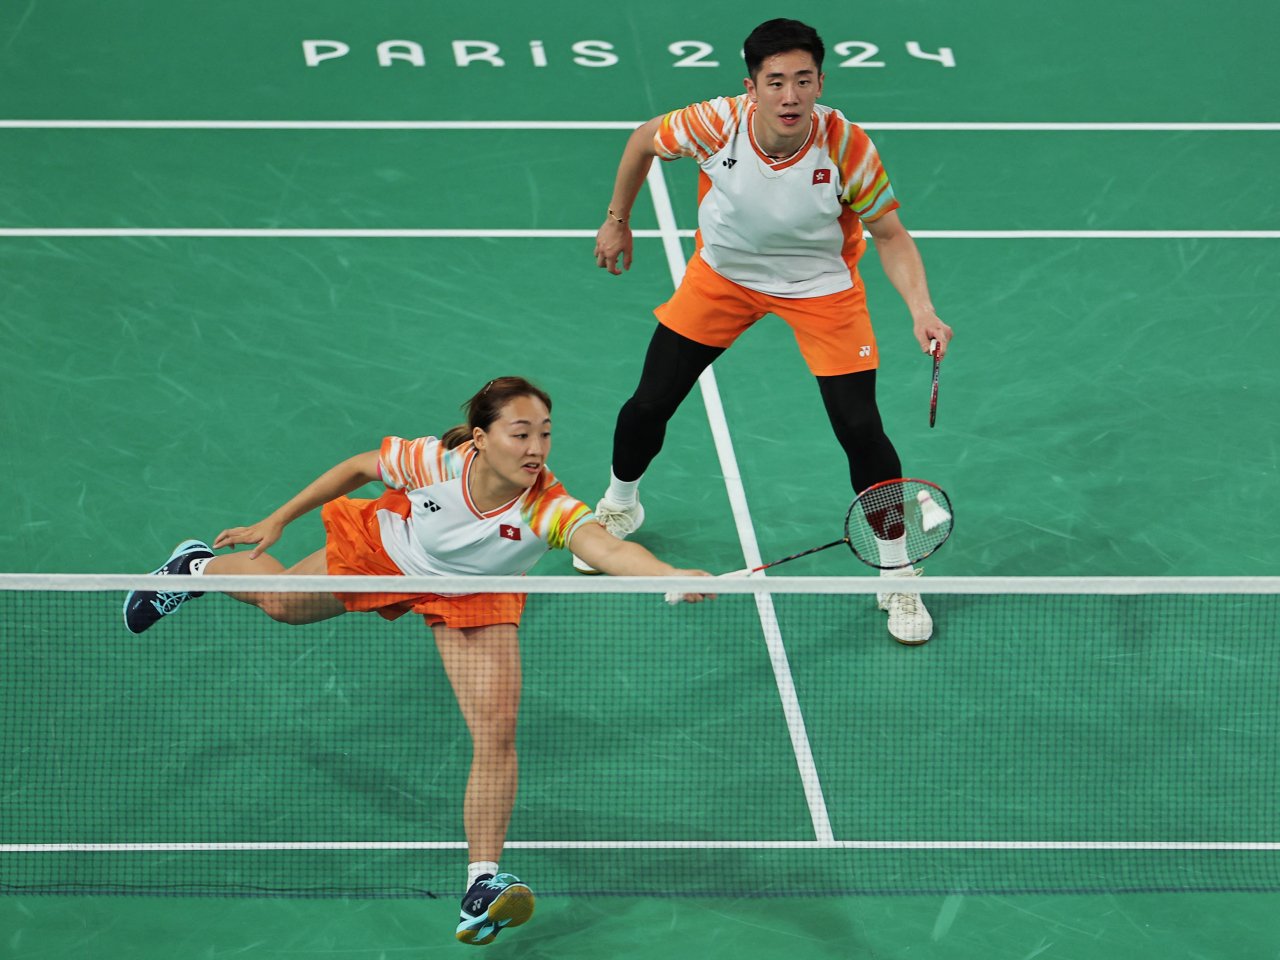 Badminton duo Tang and Tse win first Paris match